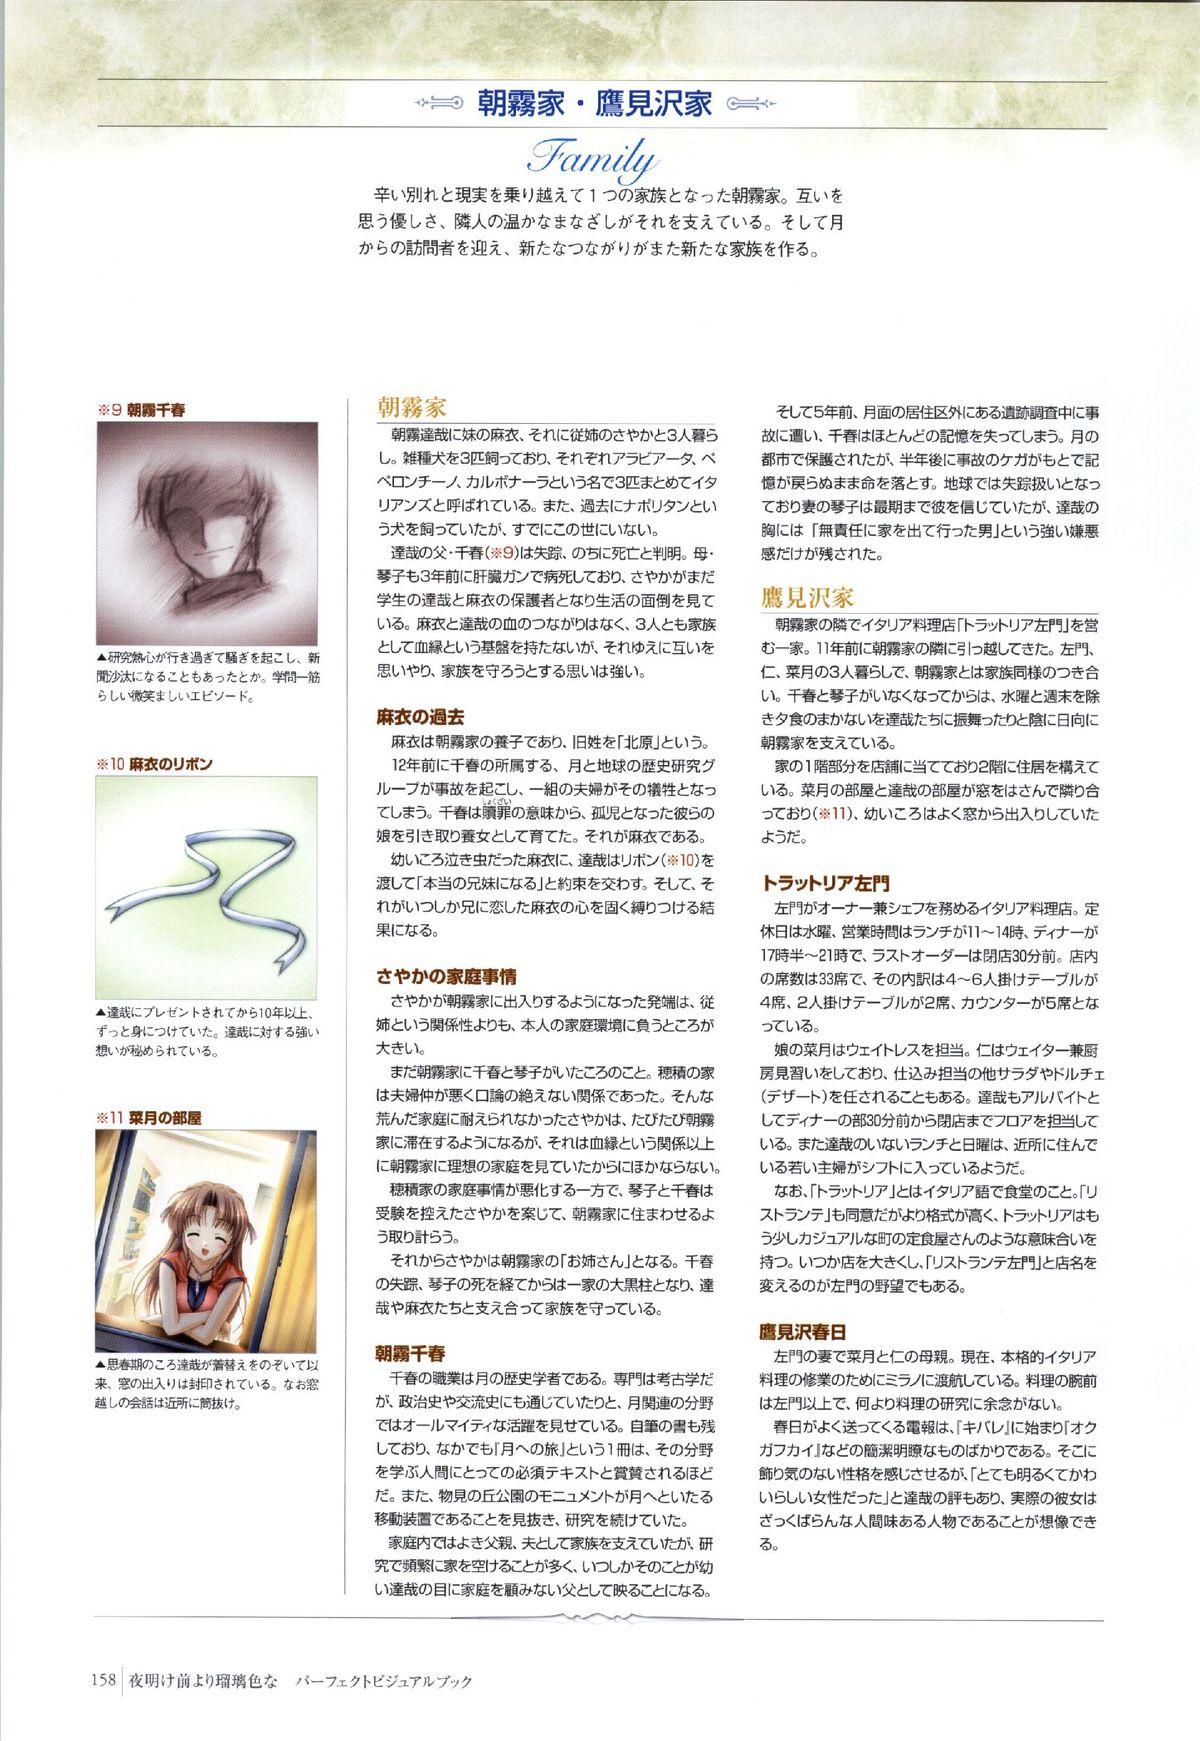 Yoake Mae Yori Ruri Iro Na ( Crescent Love ) Perfect Visual Book 154